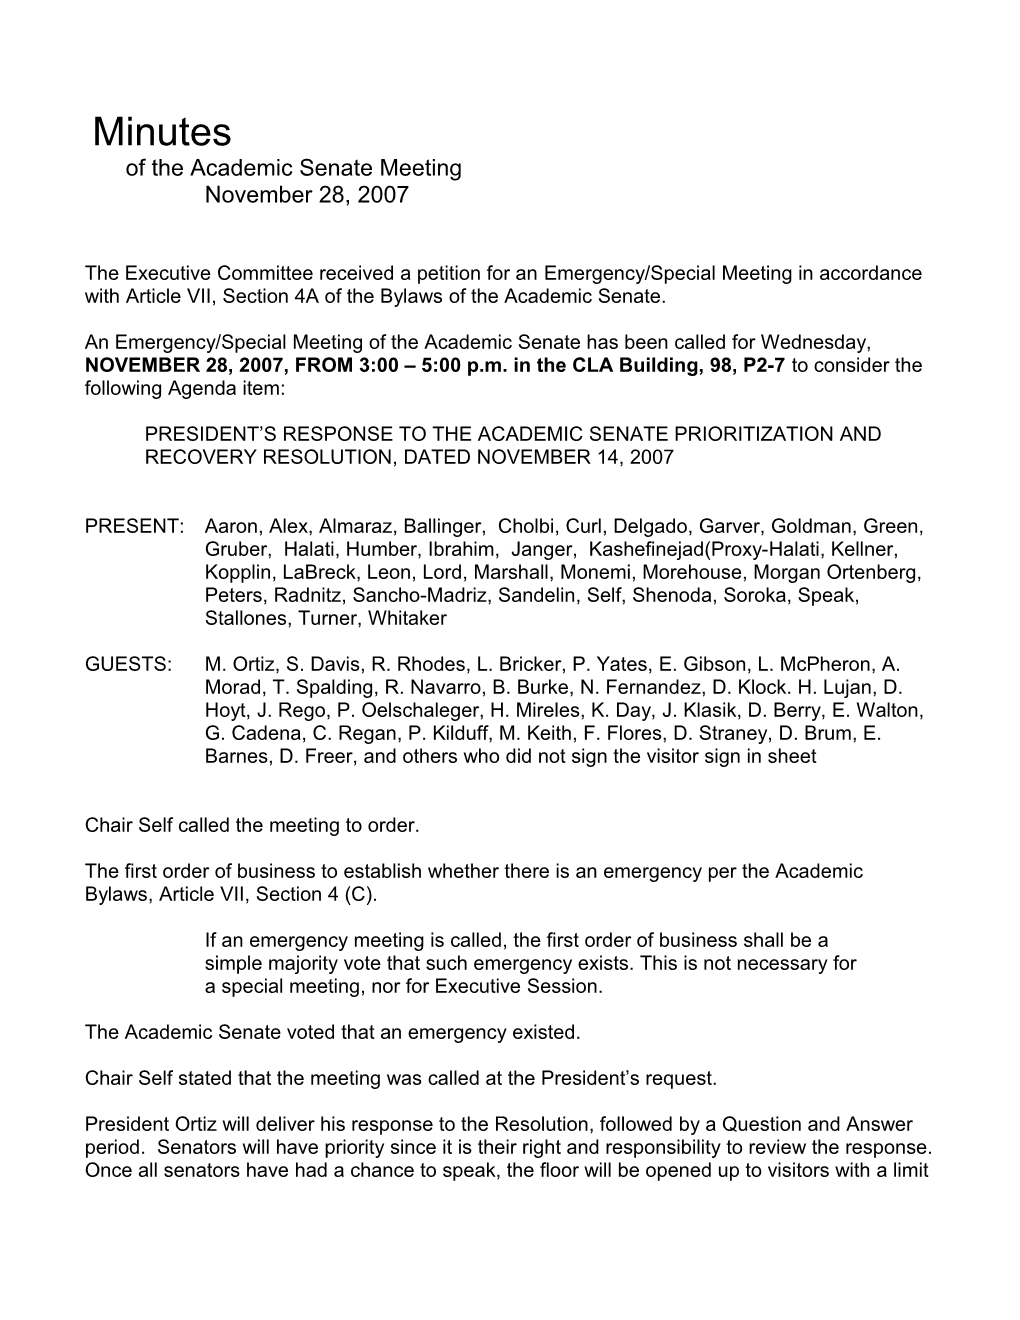 Academic Senate Minutes November 28, 2007